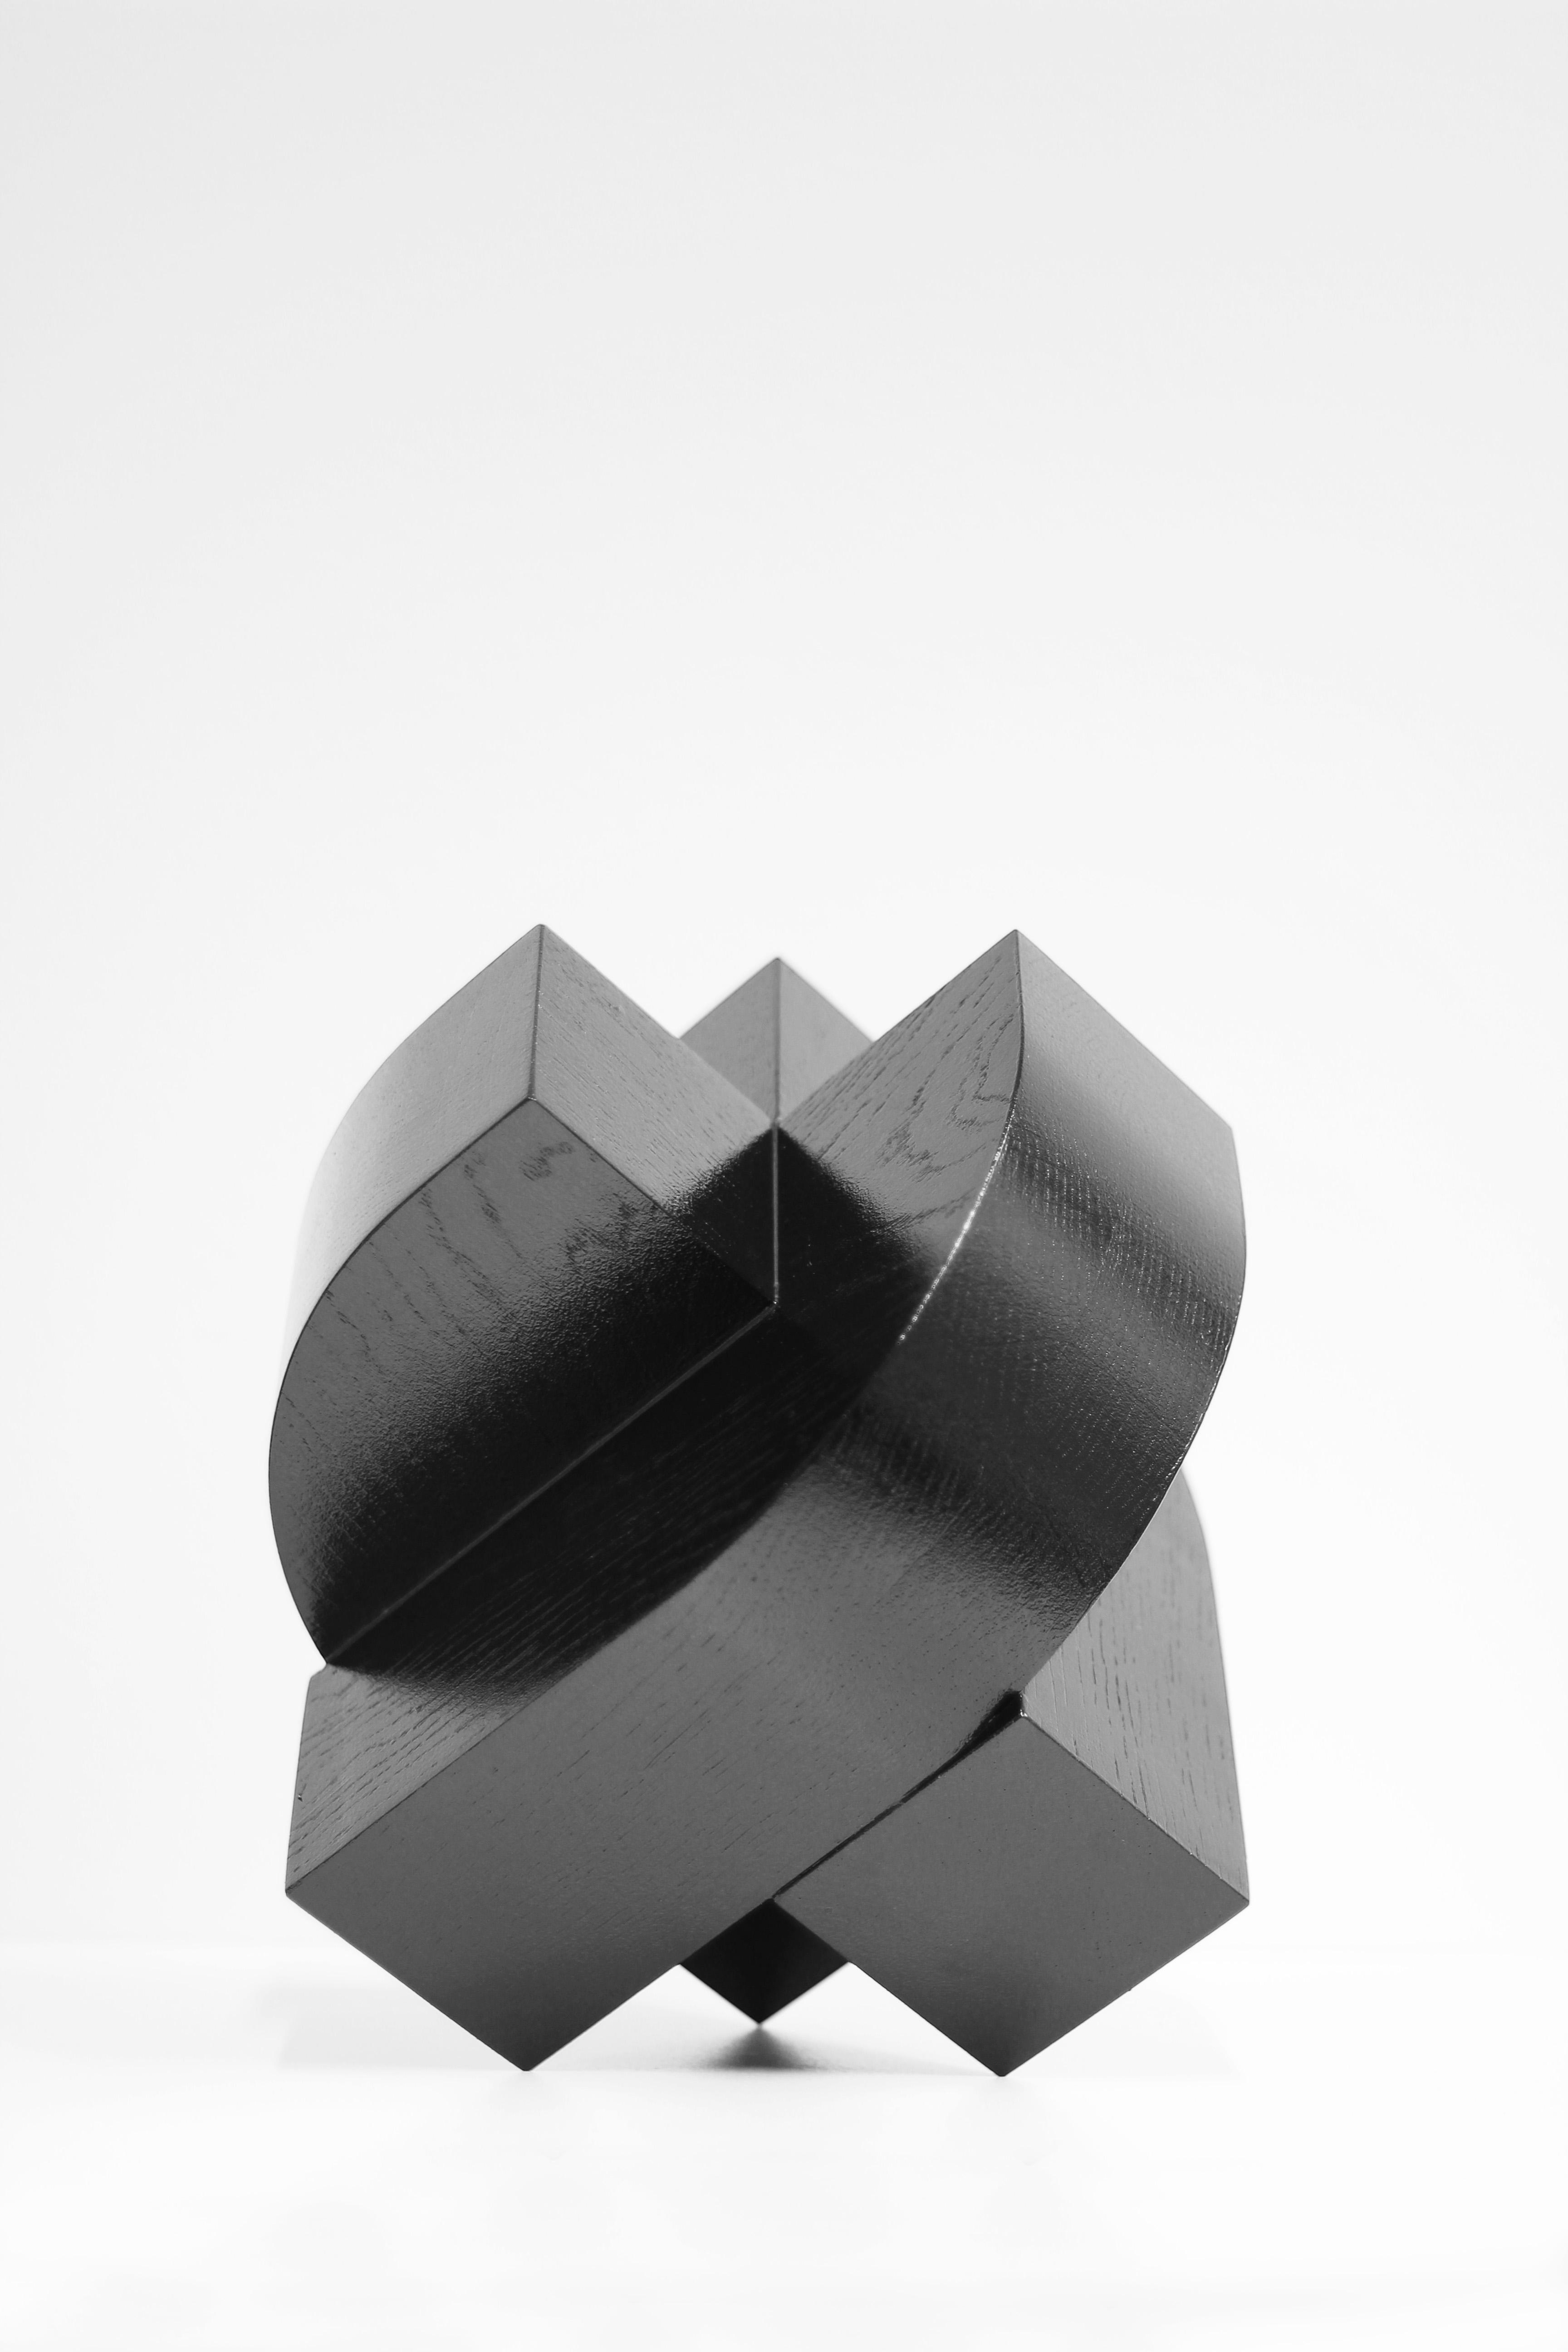 Plastic Black solid oak sculpture, X4 J, by Dutch Studio Verbaan For Sale